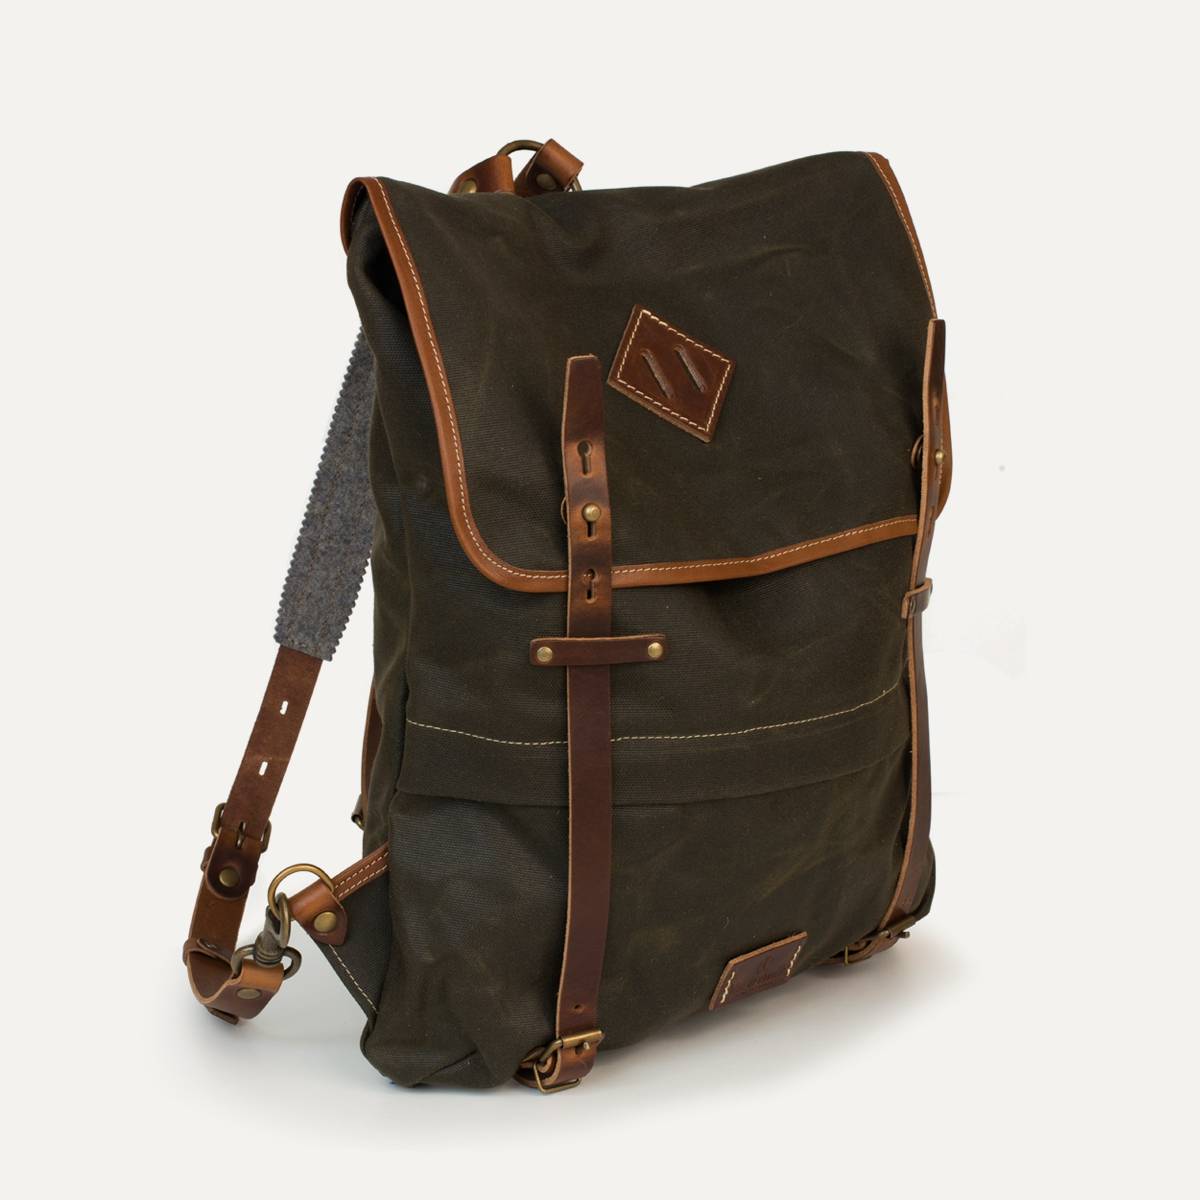 Coursier backpack WAXY - Kaki/Pain Brûlé (image n°1)